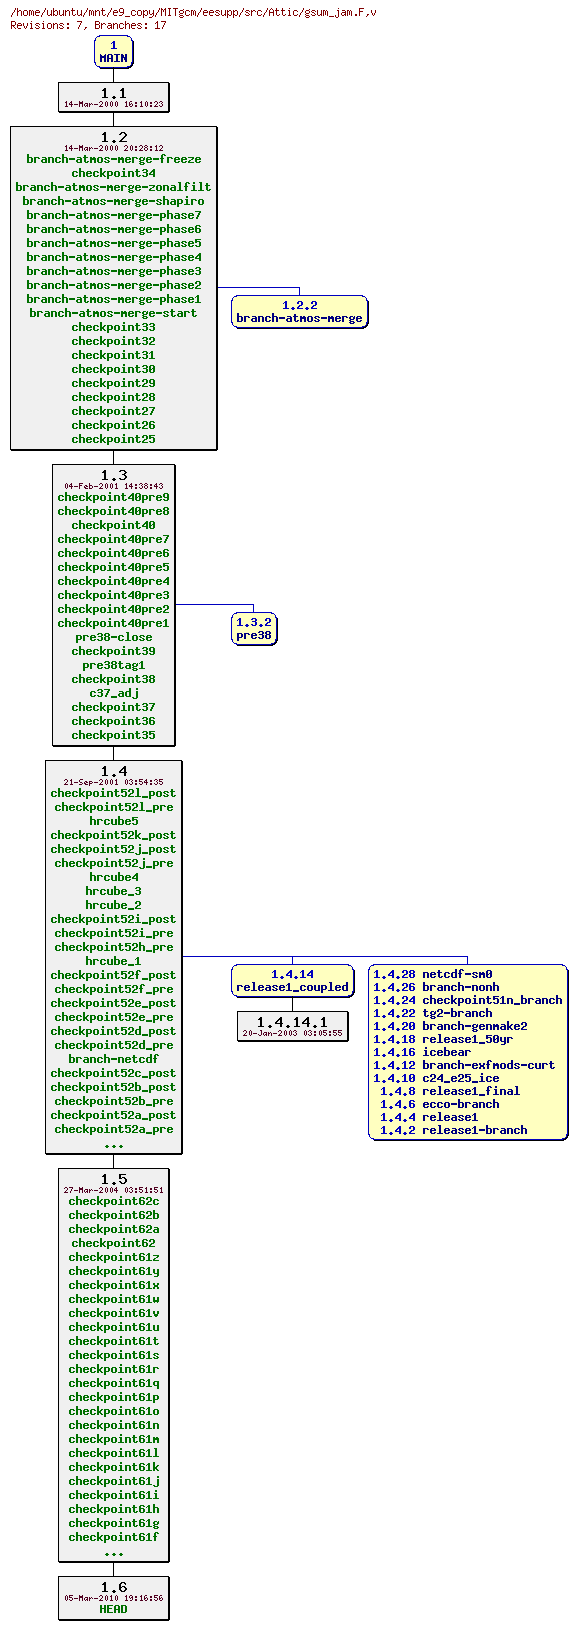 Revisions of MITgcm/eesupp/src/gsum_jam.F